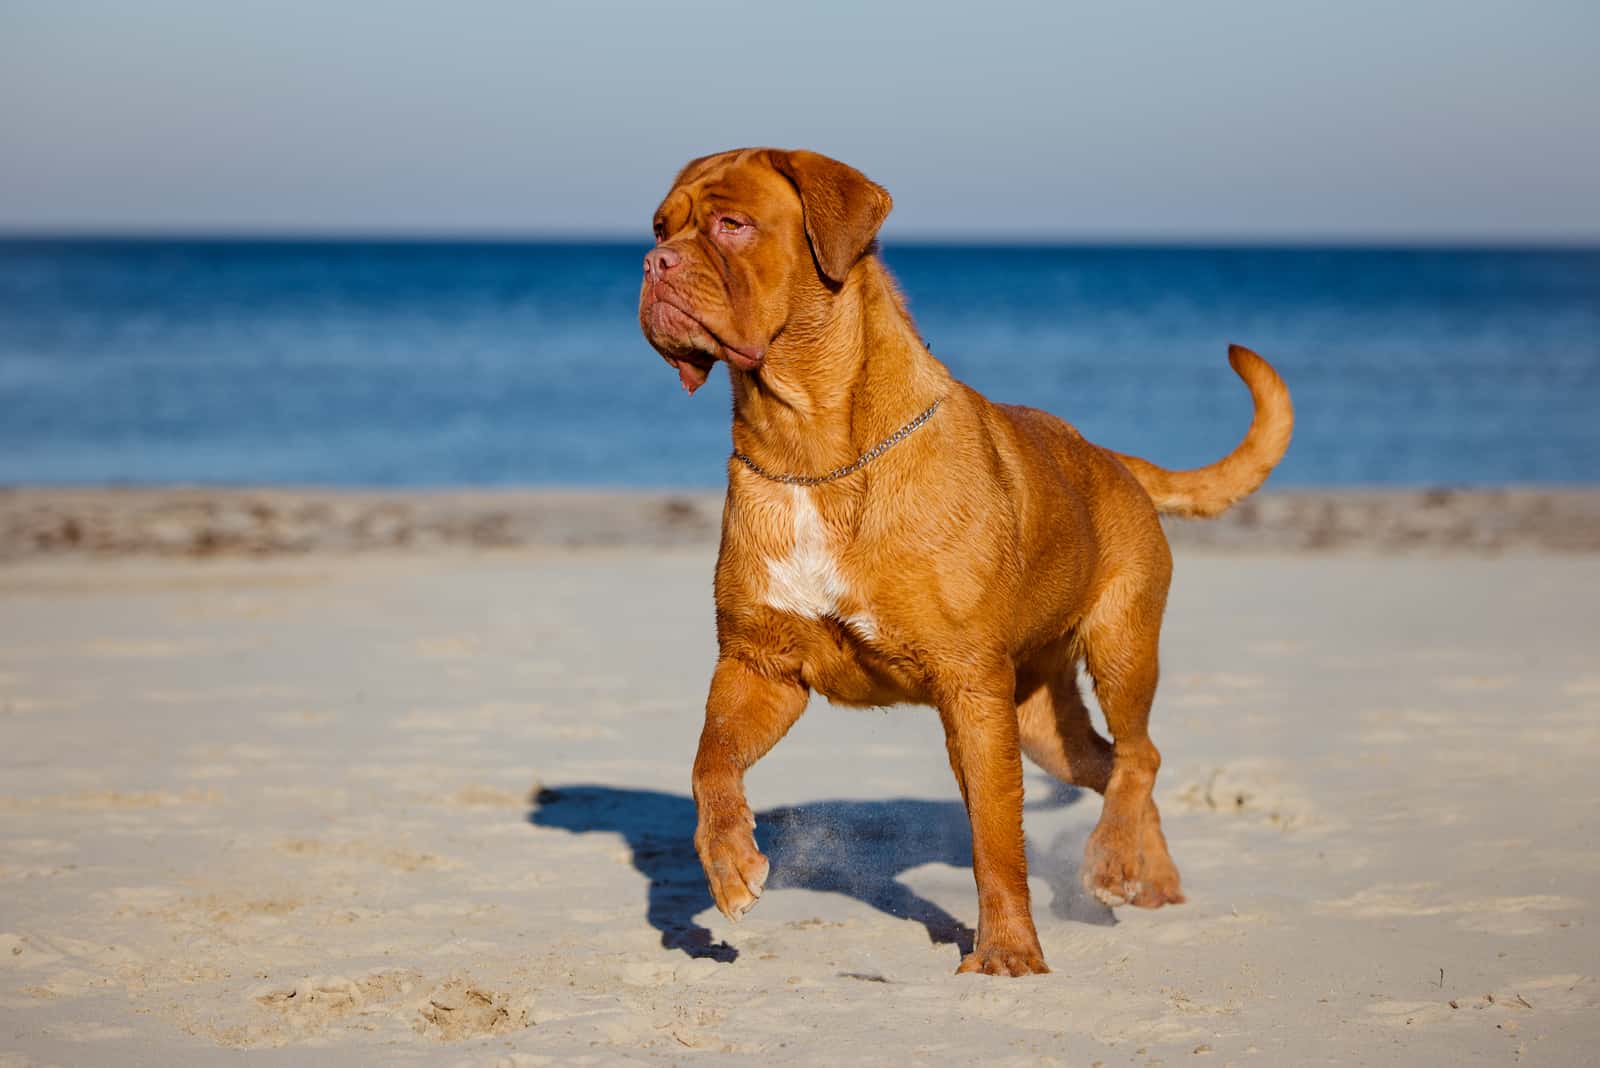 Dogue De Bordeaux is standing on the beach